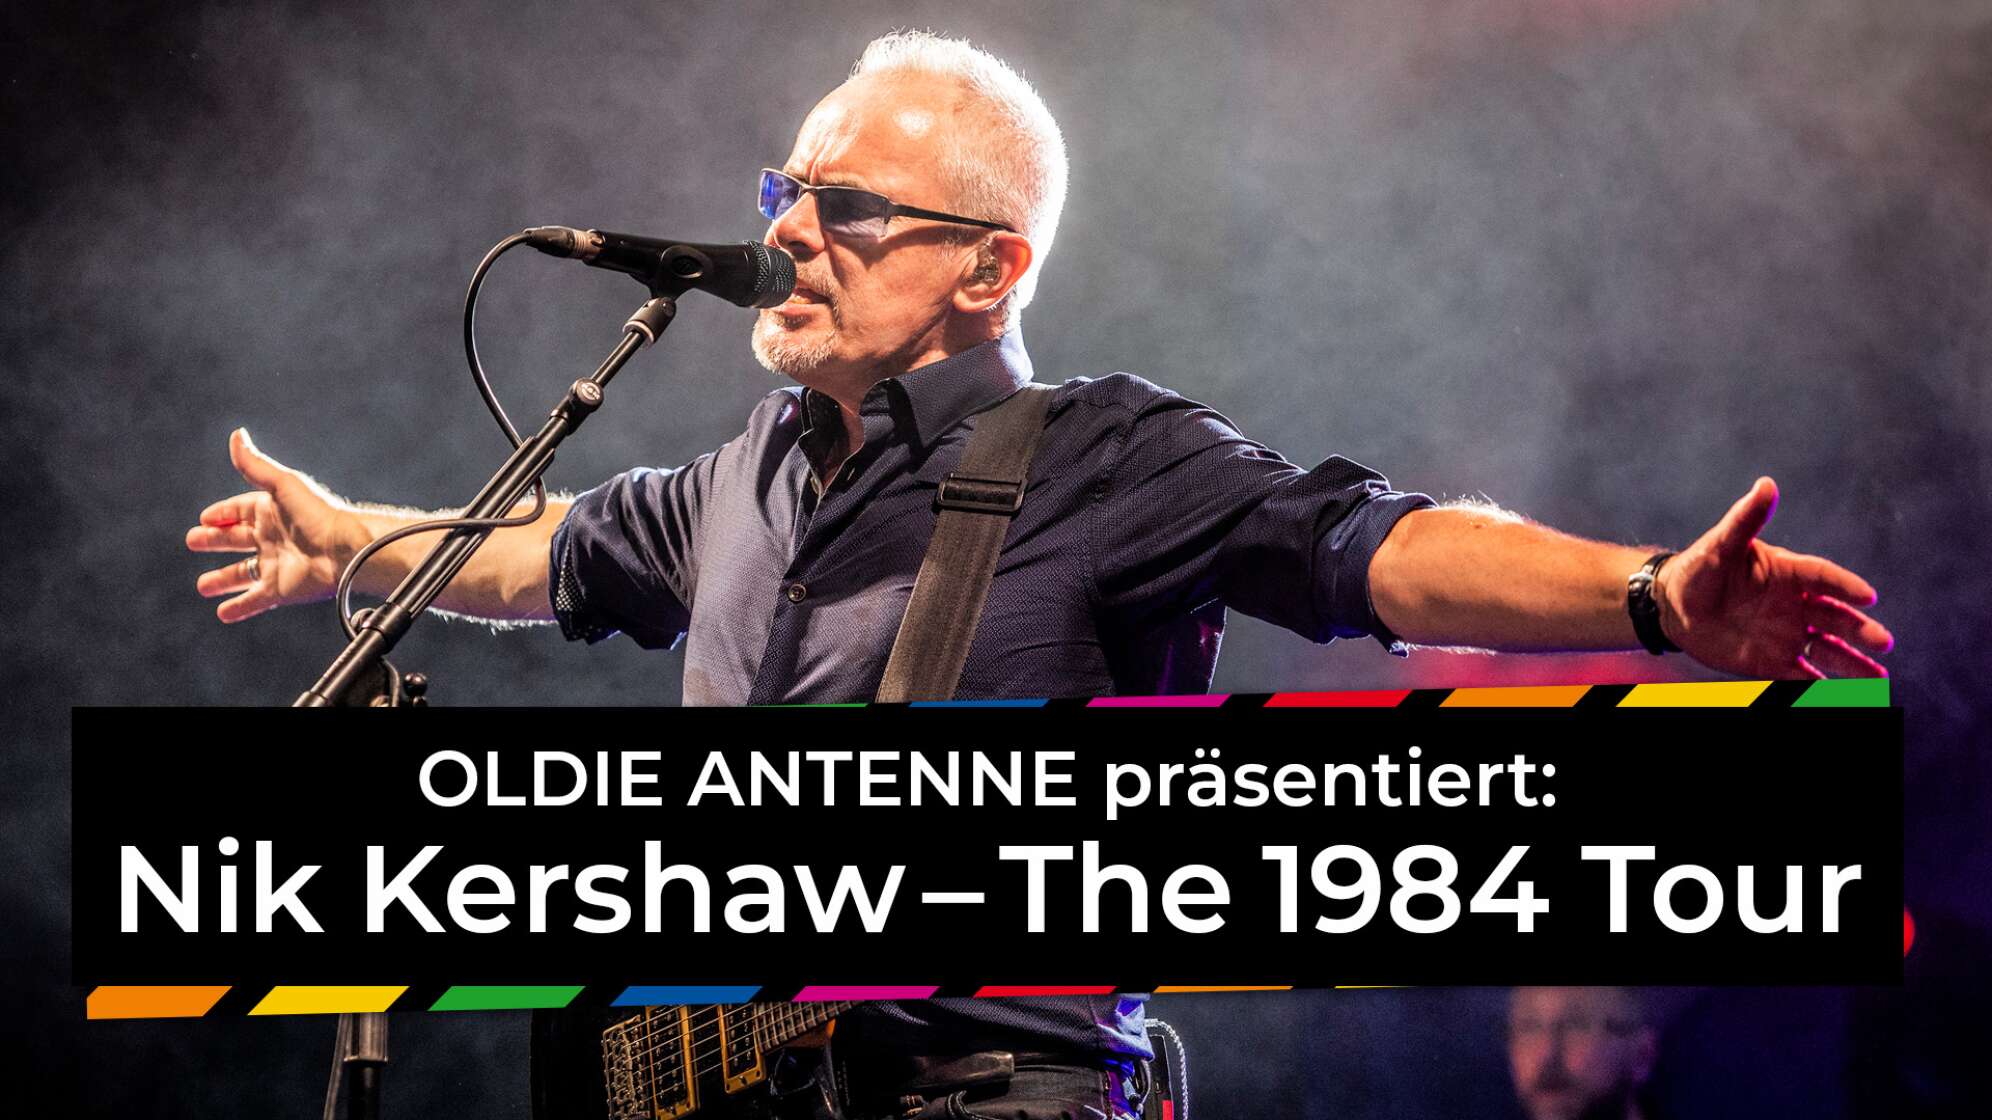 OLDIE ANTENNE präsentiert Nik Kershaw – The 1984 Tour